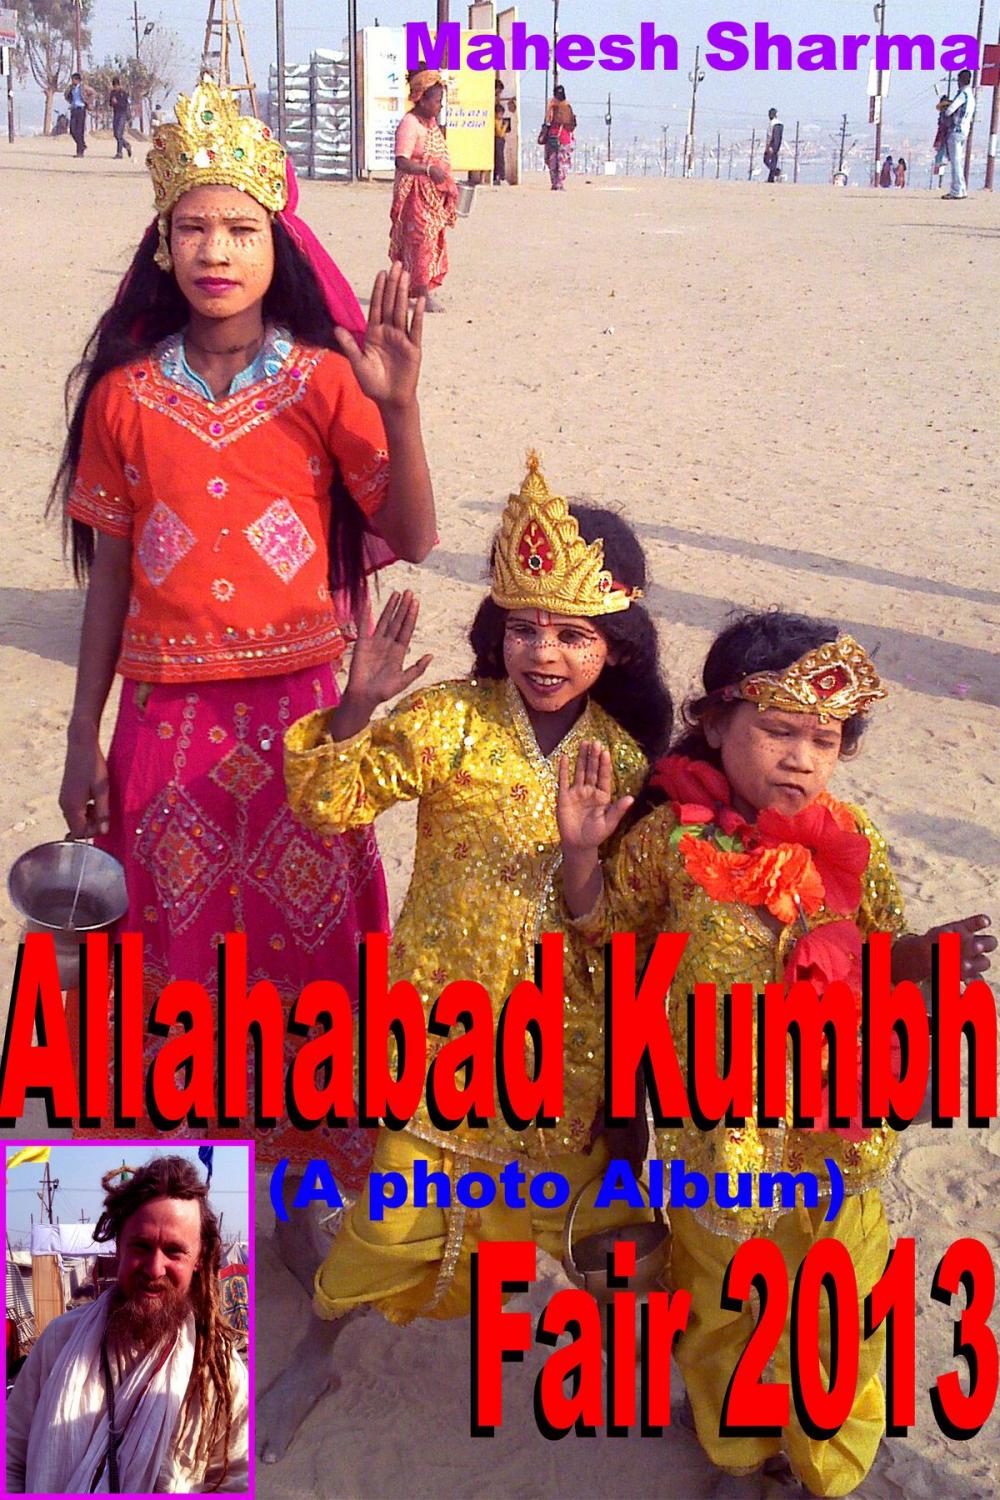 Big bigCover of Allahabad Kumbh Fair 2013 (A photo Album)